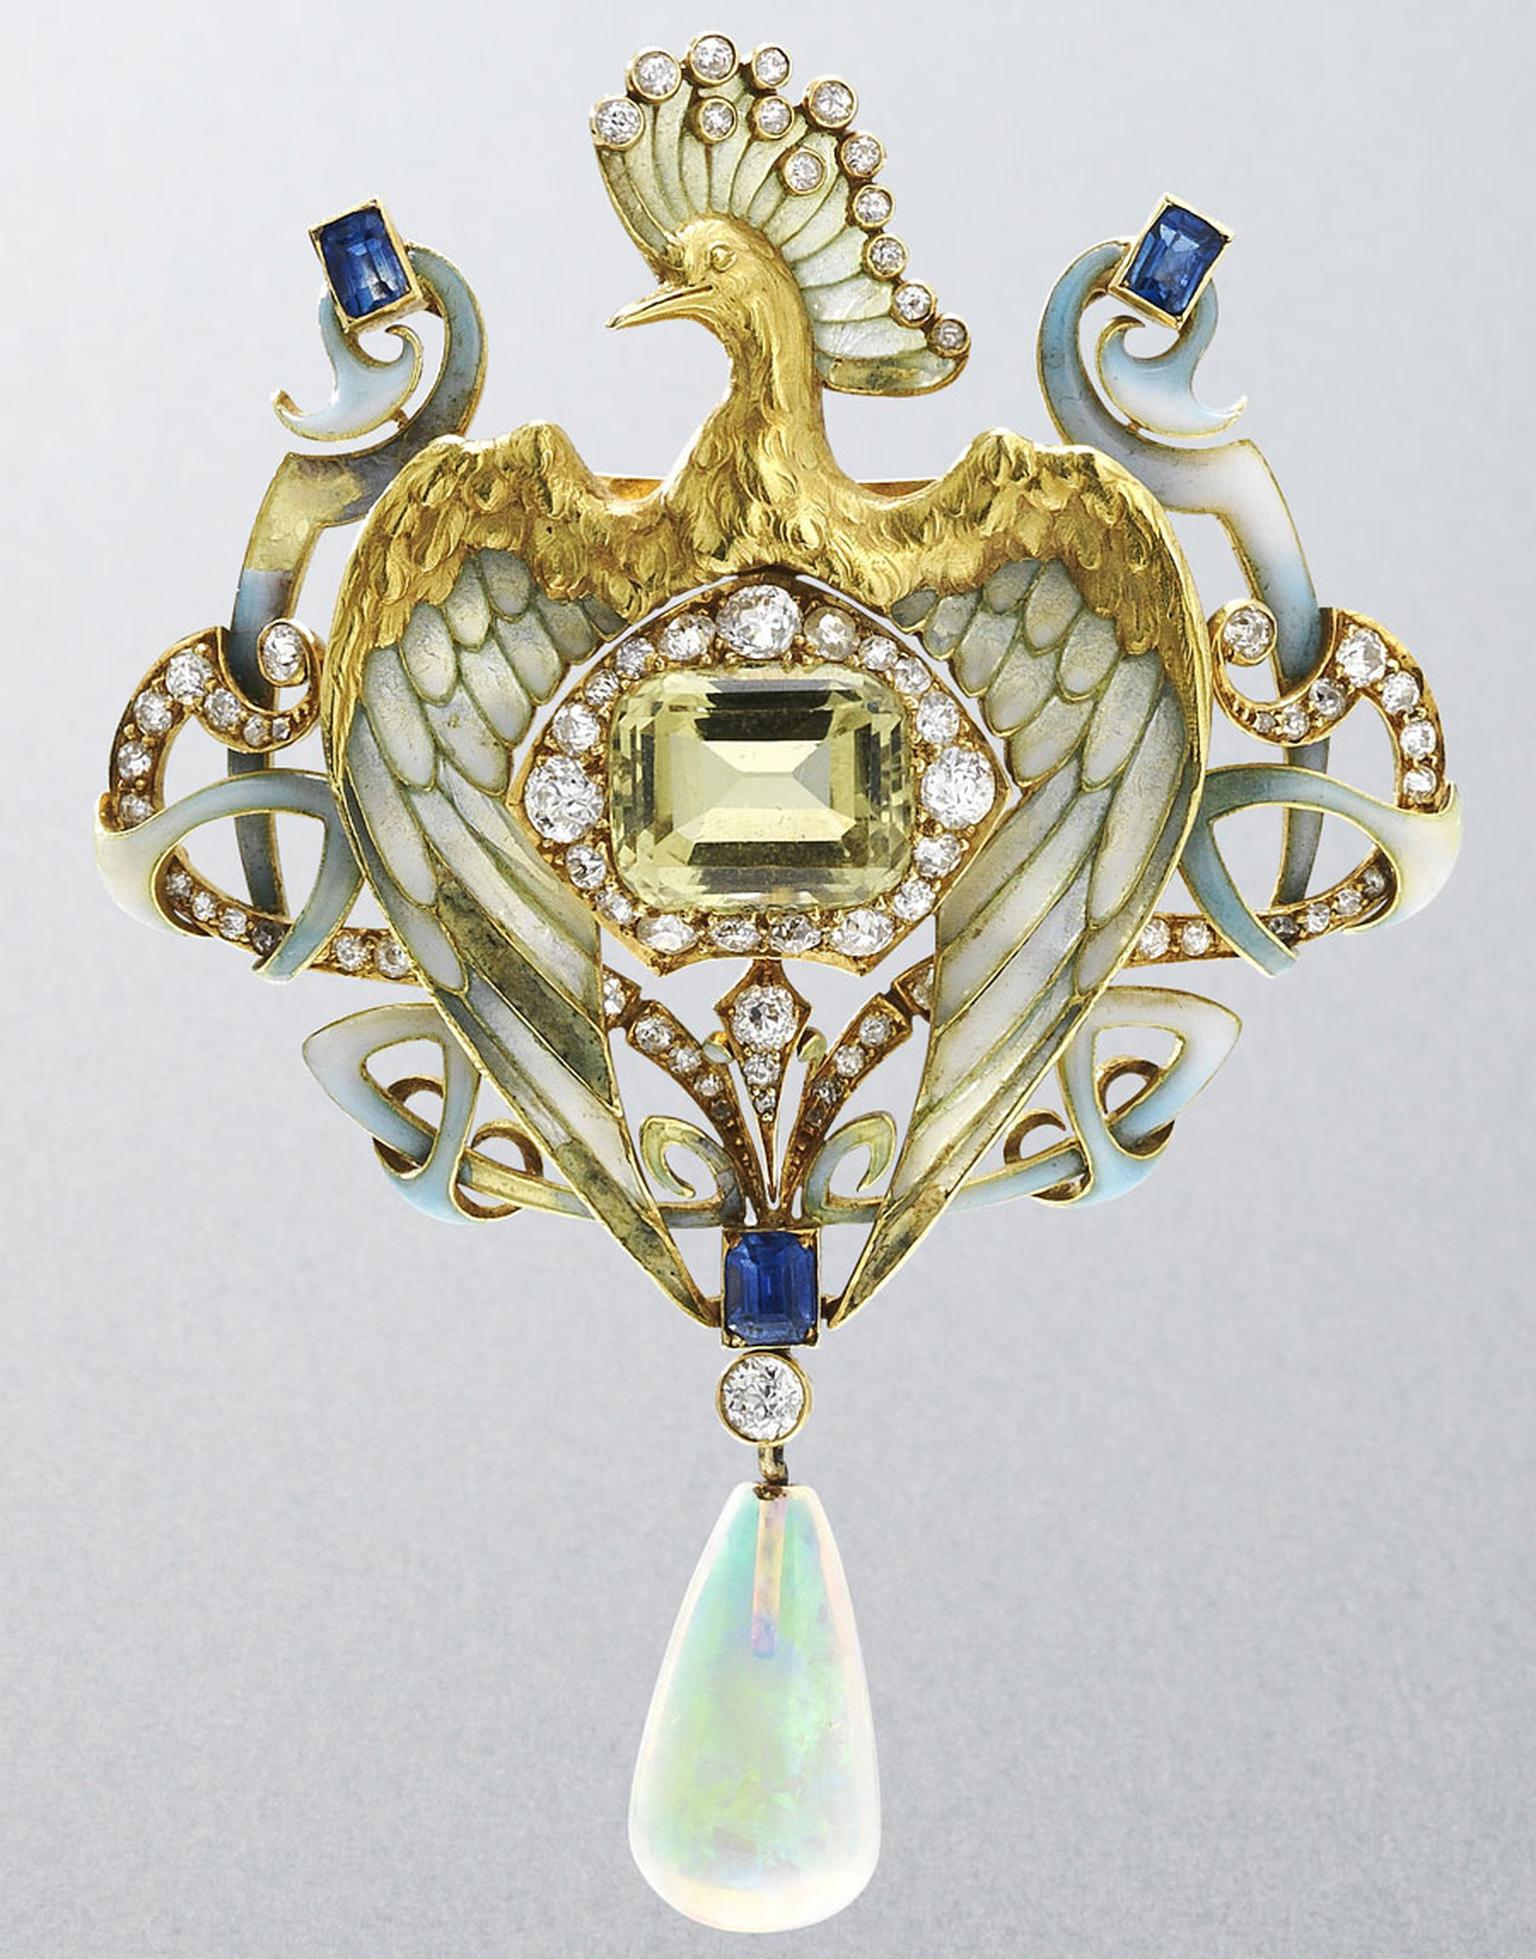 bonhams-An-art-nouveau-enamel,-peridot-and-diamond-broochpendant-with-opal-drop,--by-Philippe-Wolfers,